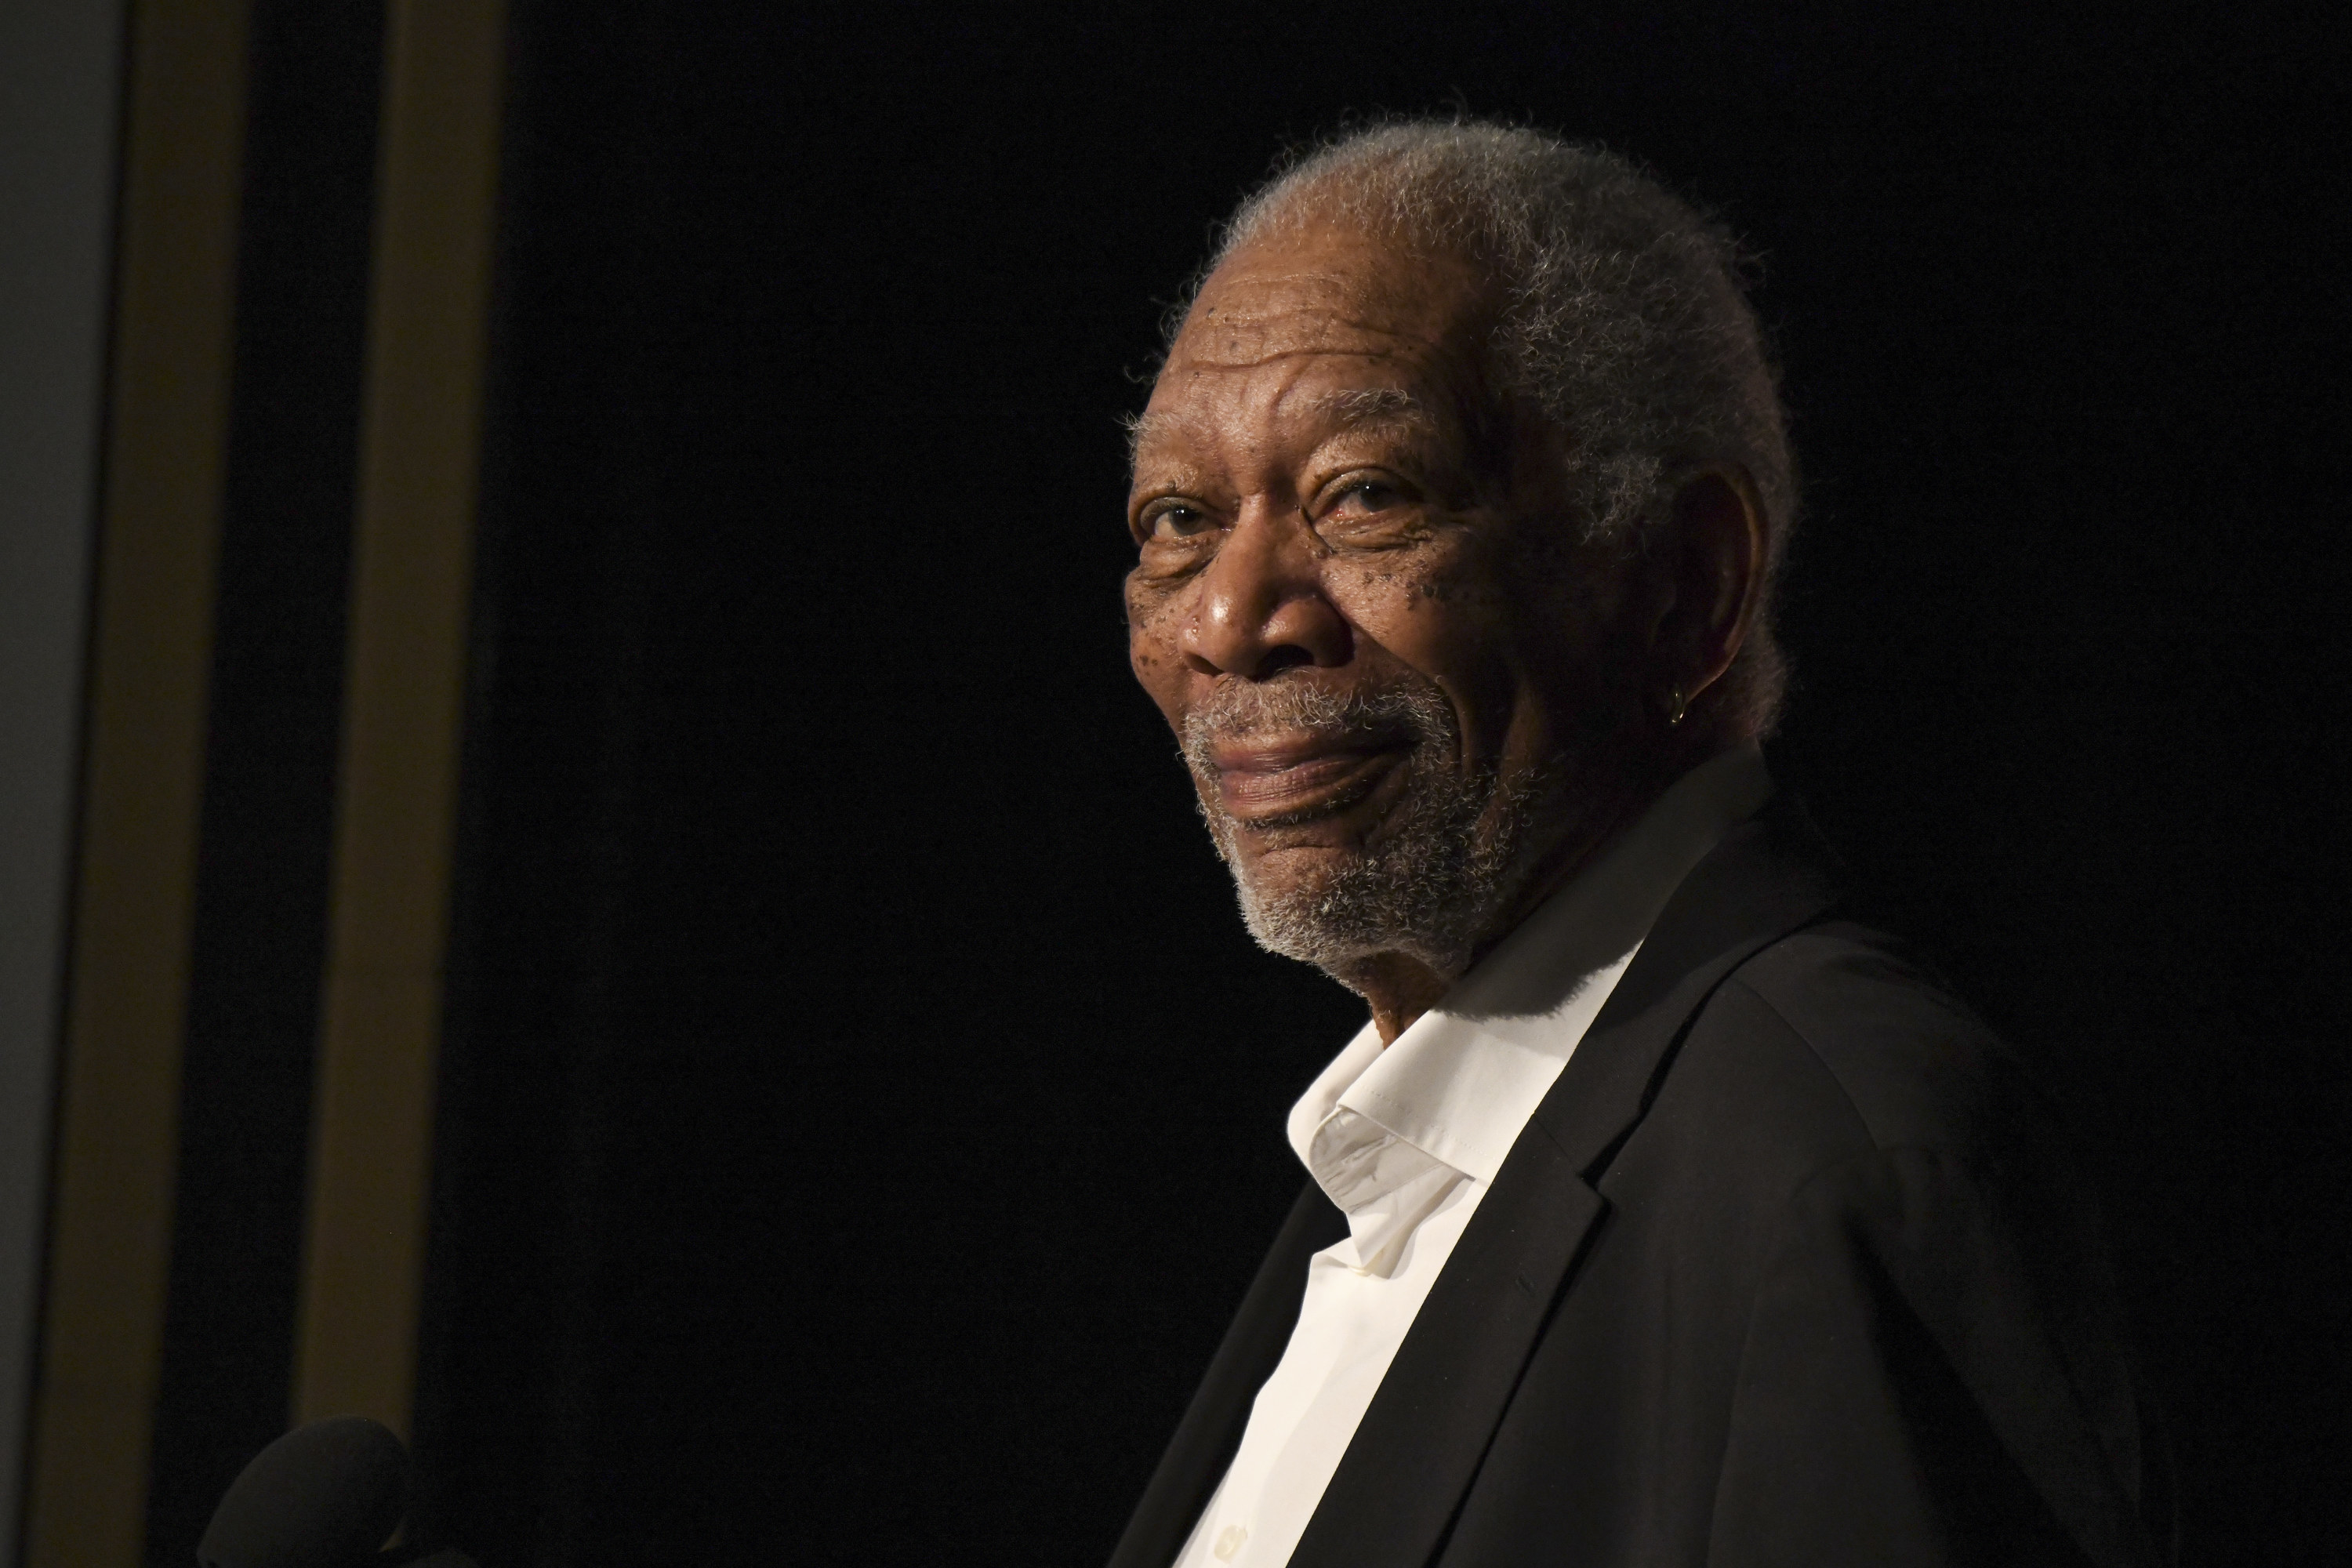 Morgan Freeman presents onstage at the AFI Awards Luncheon